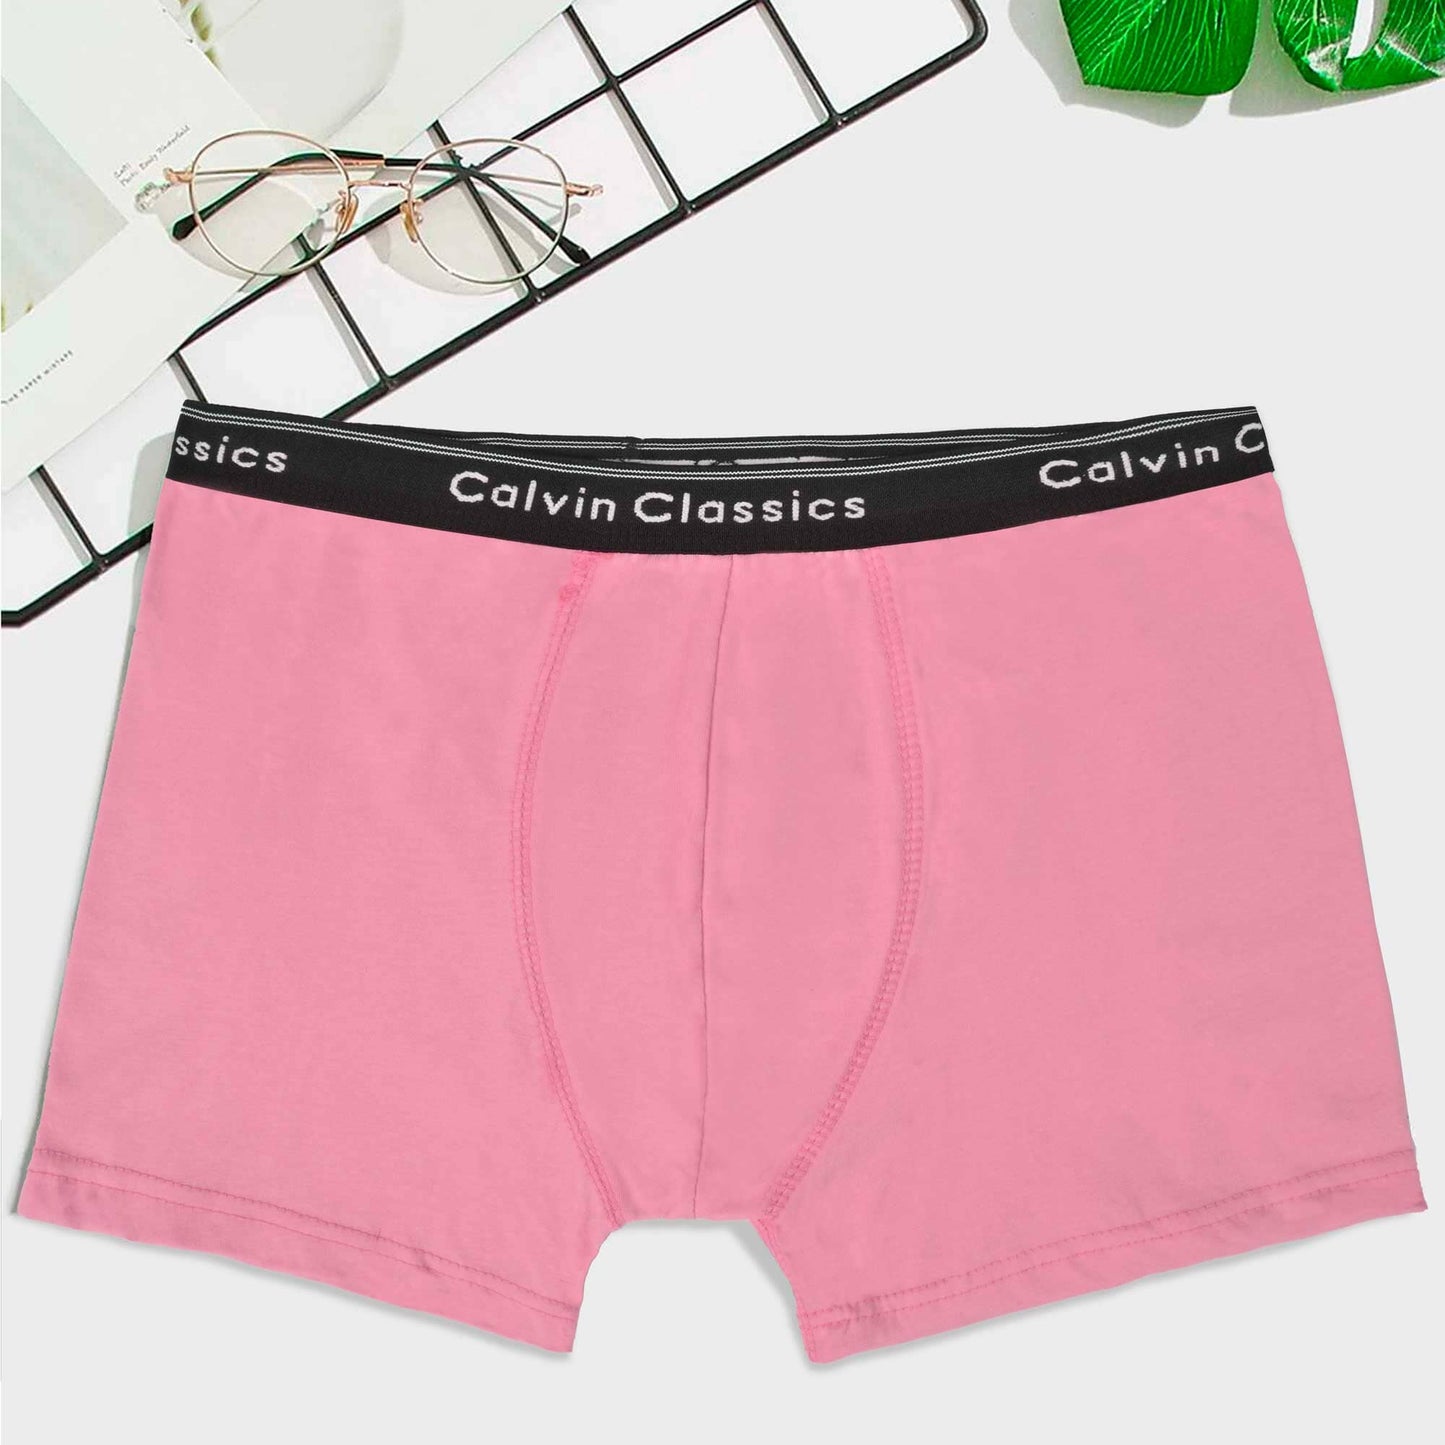 Calvin Classic Men's Boxer Shorts Men's Underwear SZK Pink S 